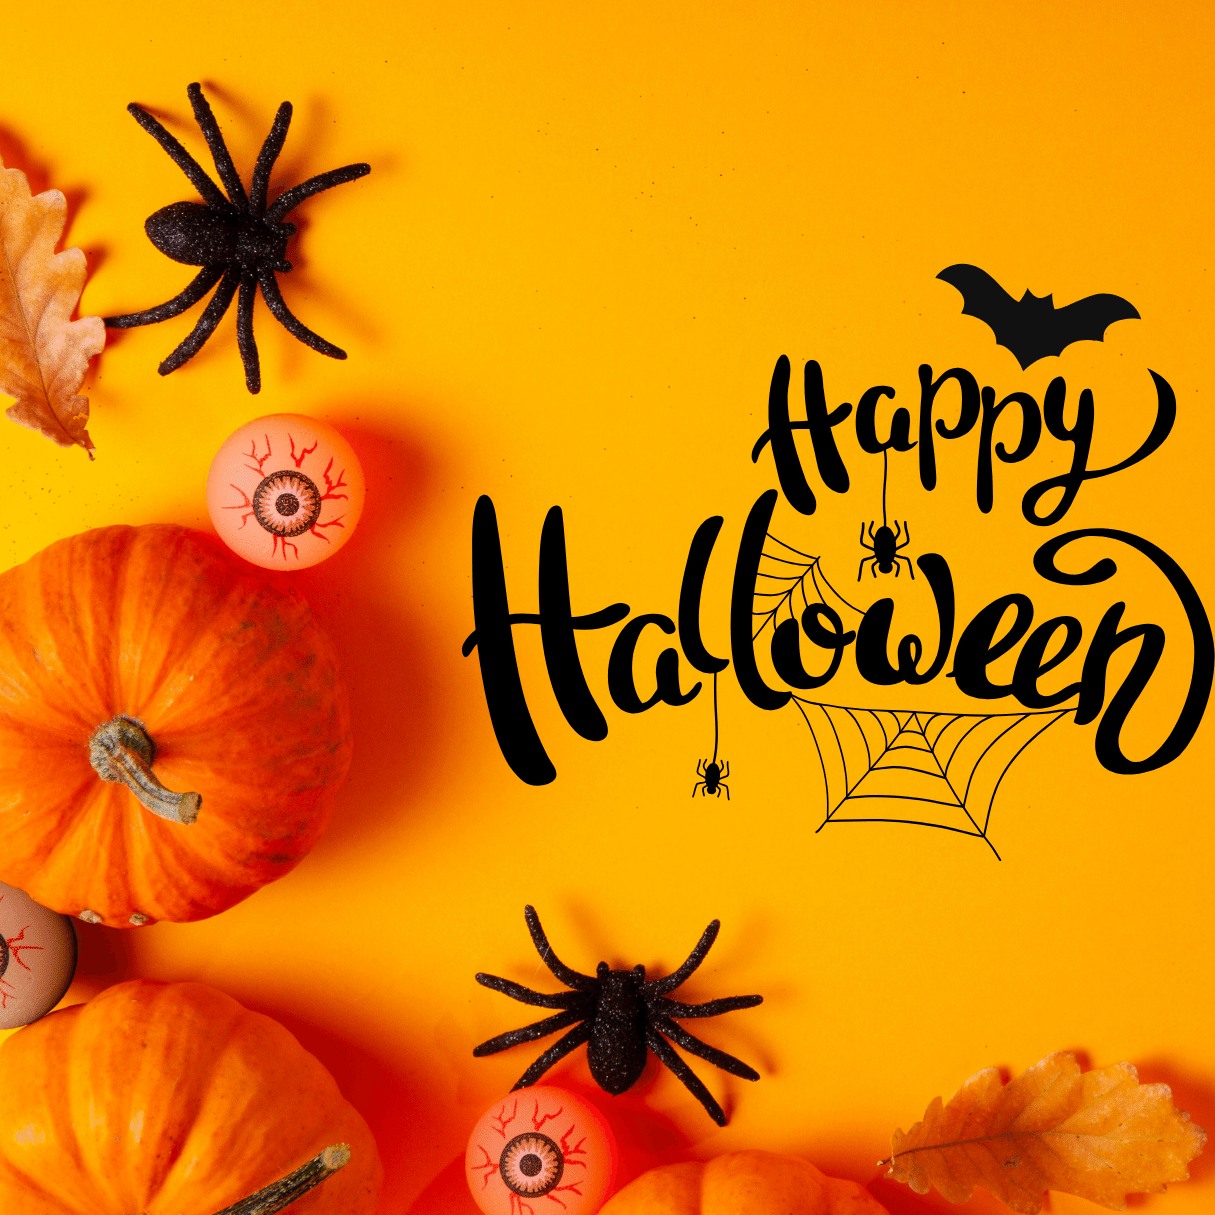 Halloween social media bundles cover image.